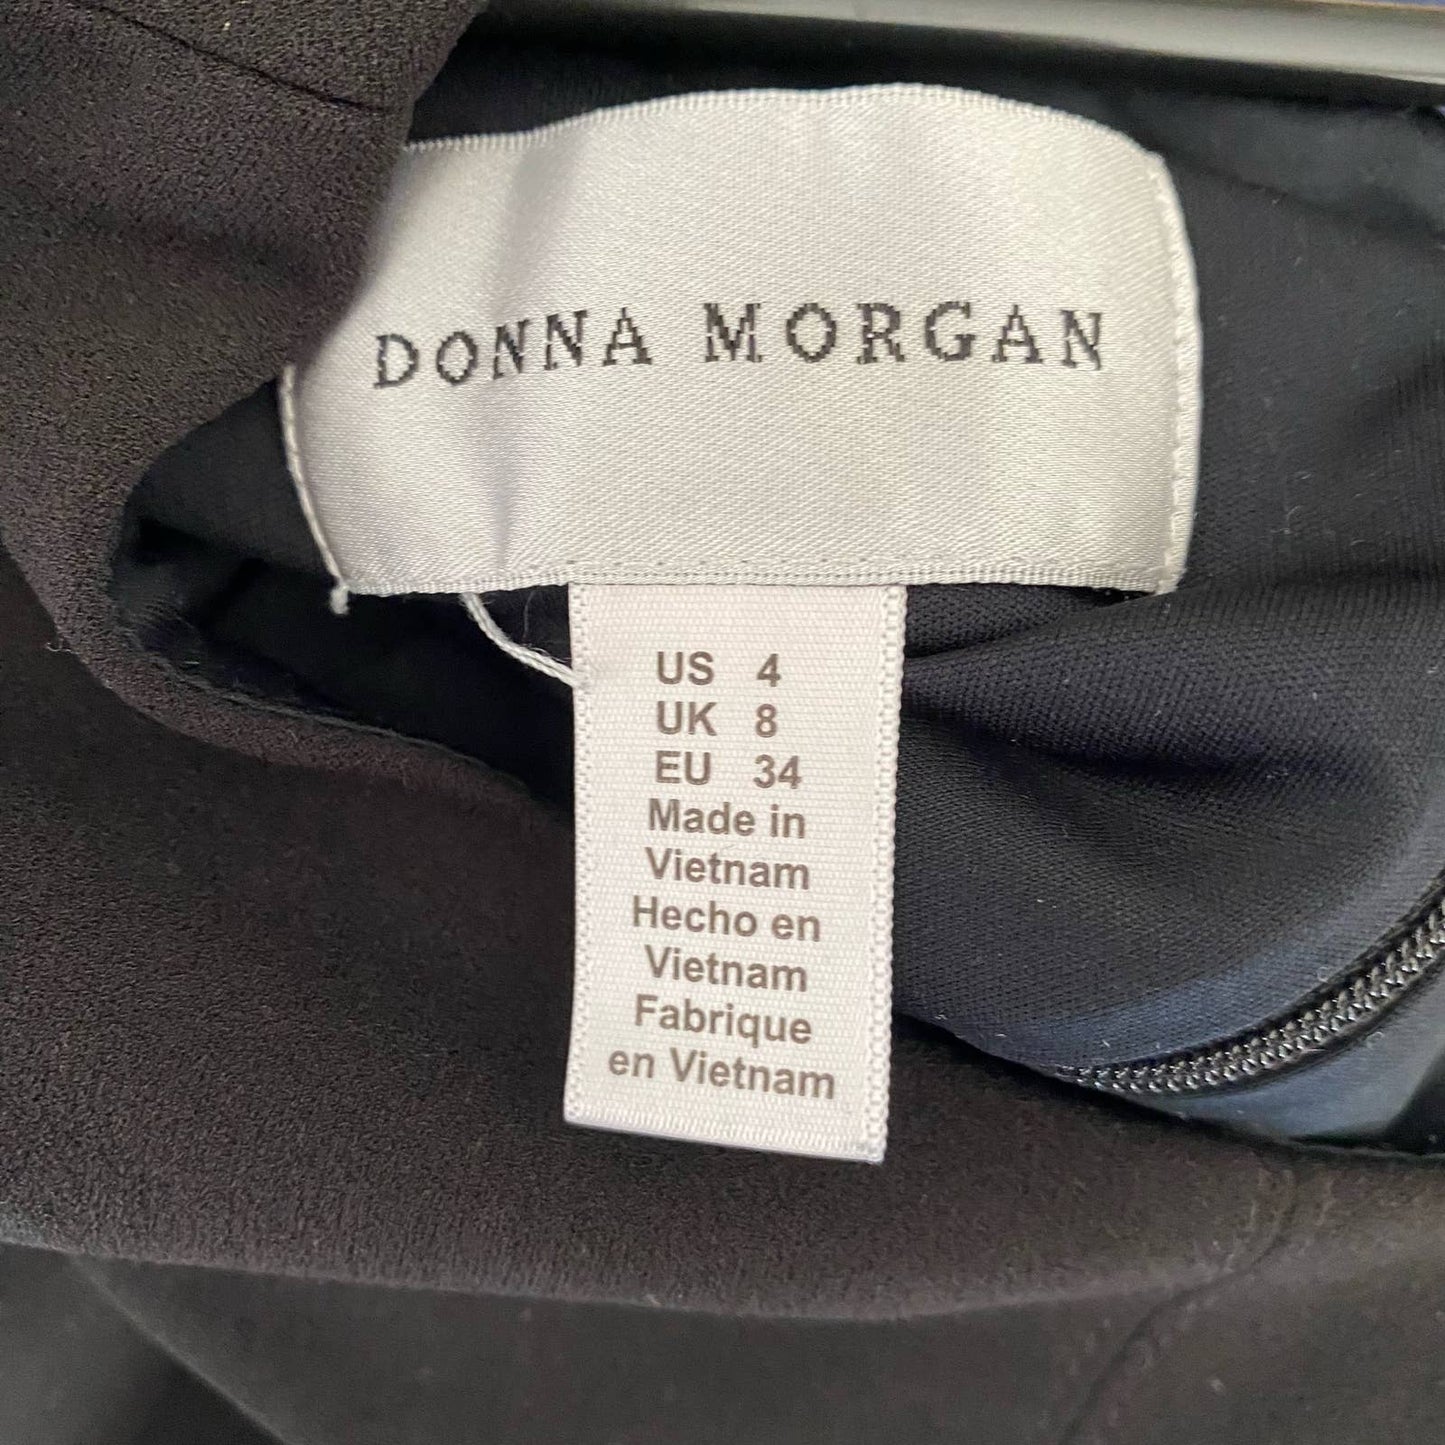 Donna Morgan sz 4 short sleeve work career sheath dress